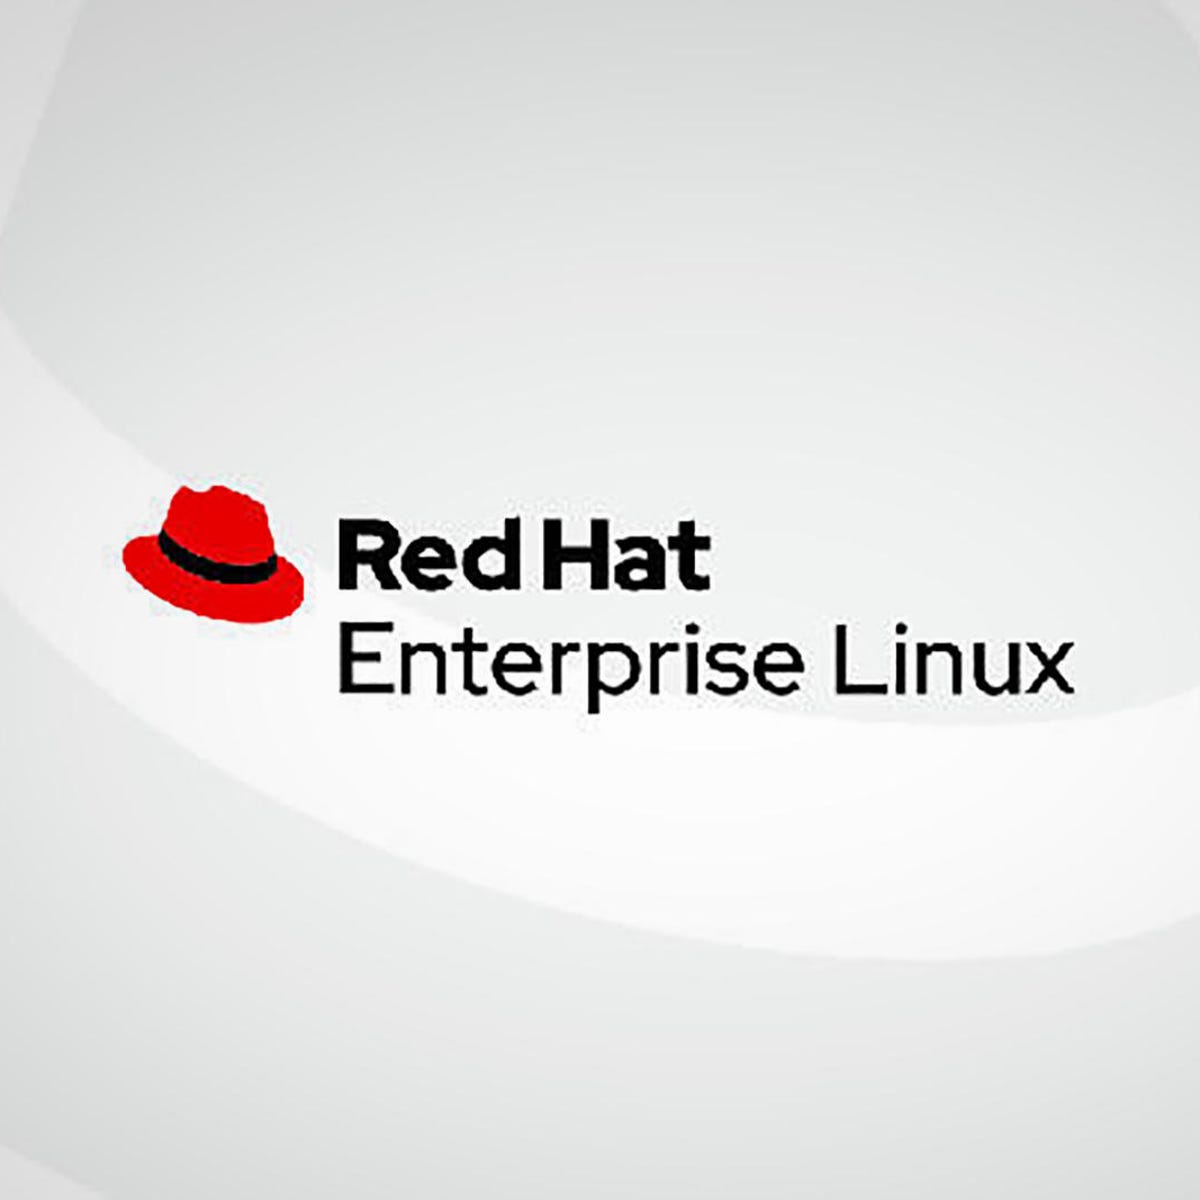 Red hat 8. Red hat Enterprise Linux 8. Red hat Enterprise Linux. Red hat Enterprise Linux логотип. Red hat Enterprise Linux 7.